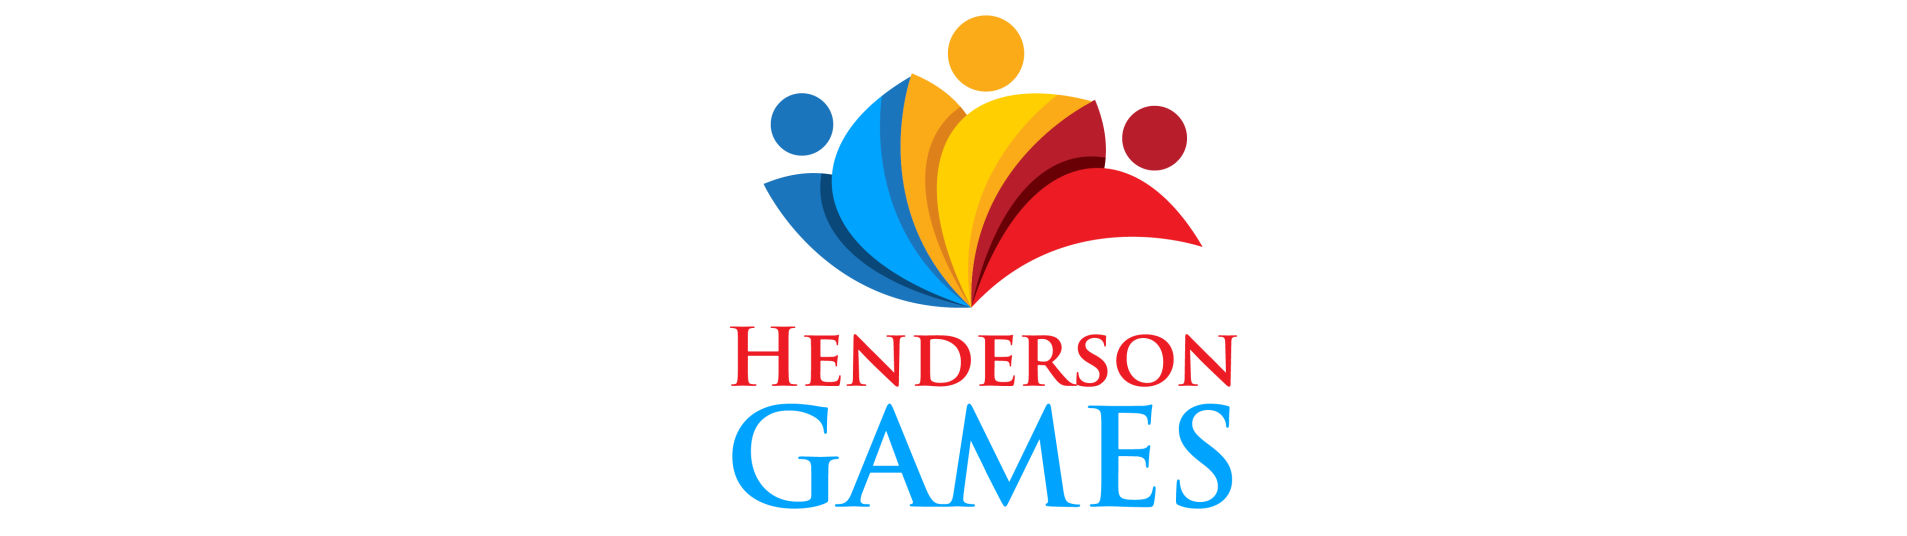 Henderson Games logo